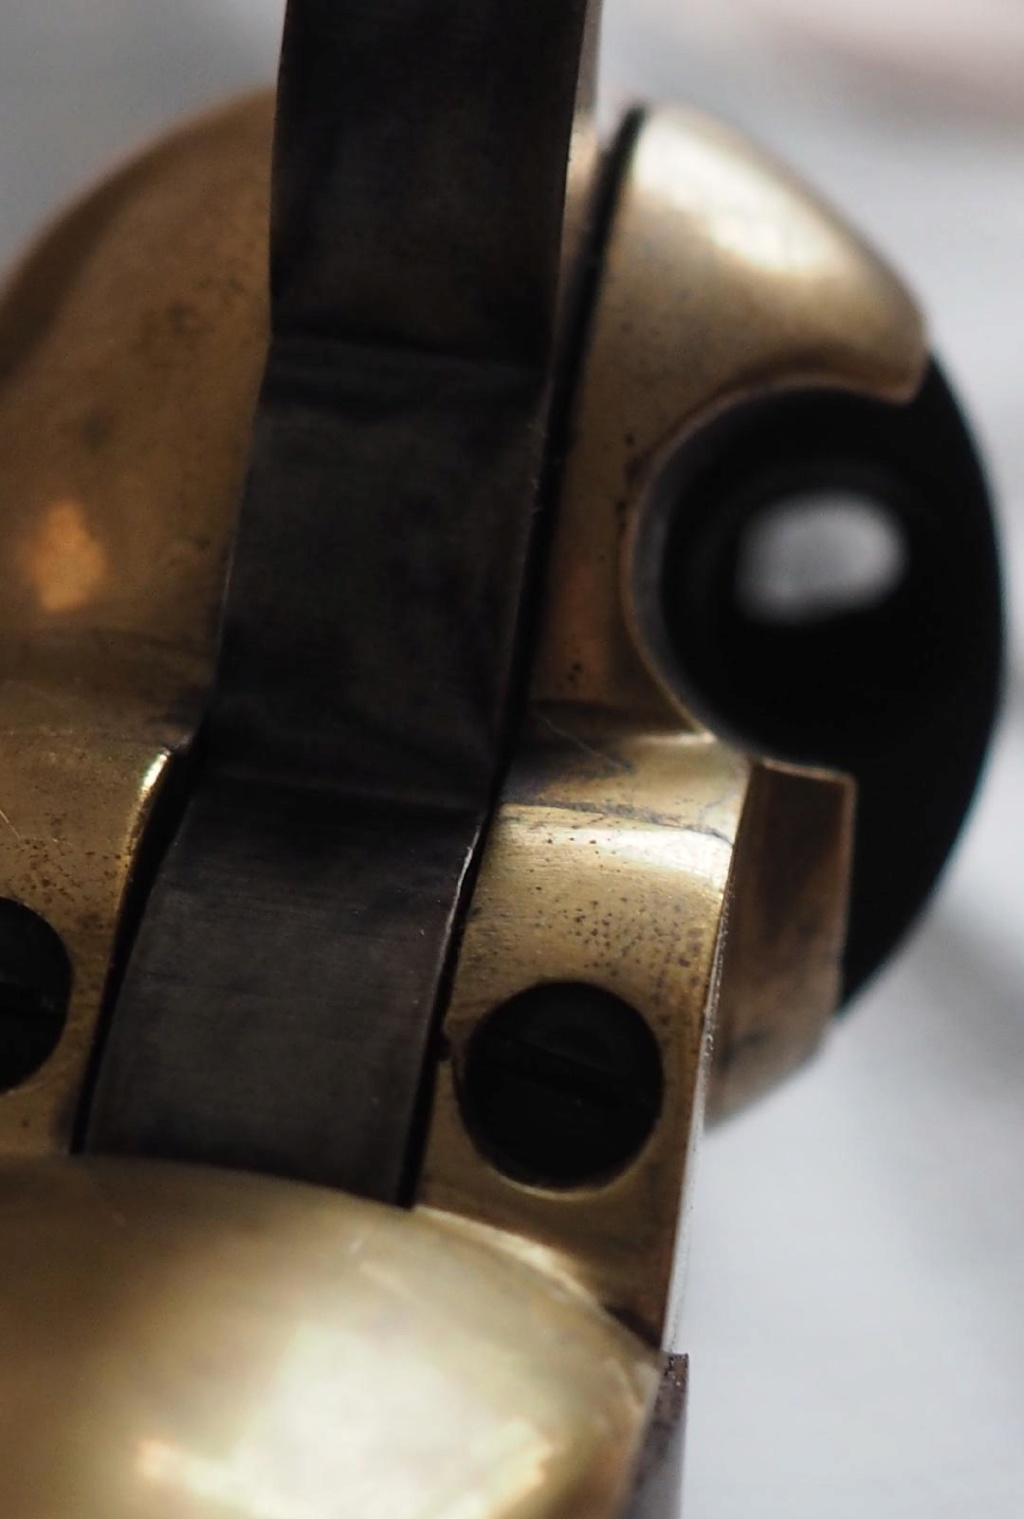 American Civil War Revolvers by Pietta 9mm Blank Fire. SWAP for MP40 Thumbn19